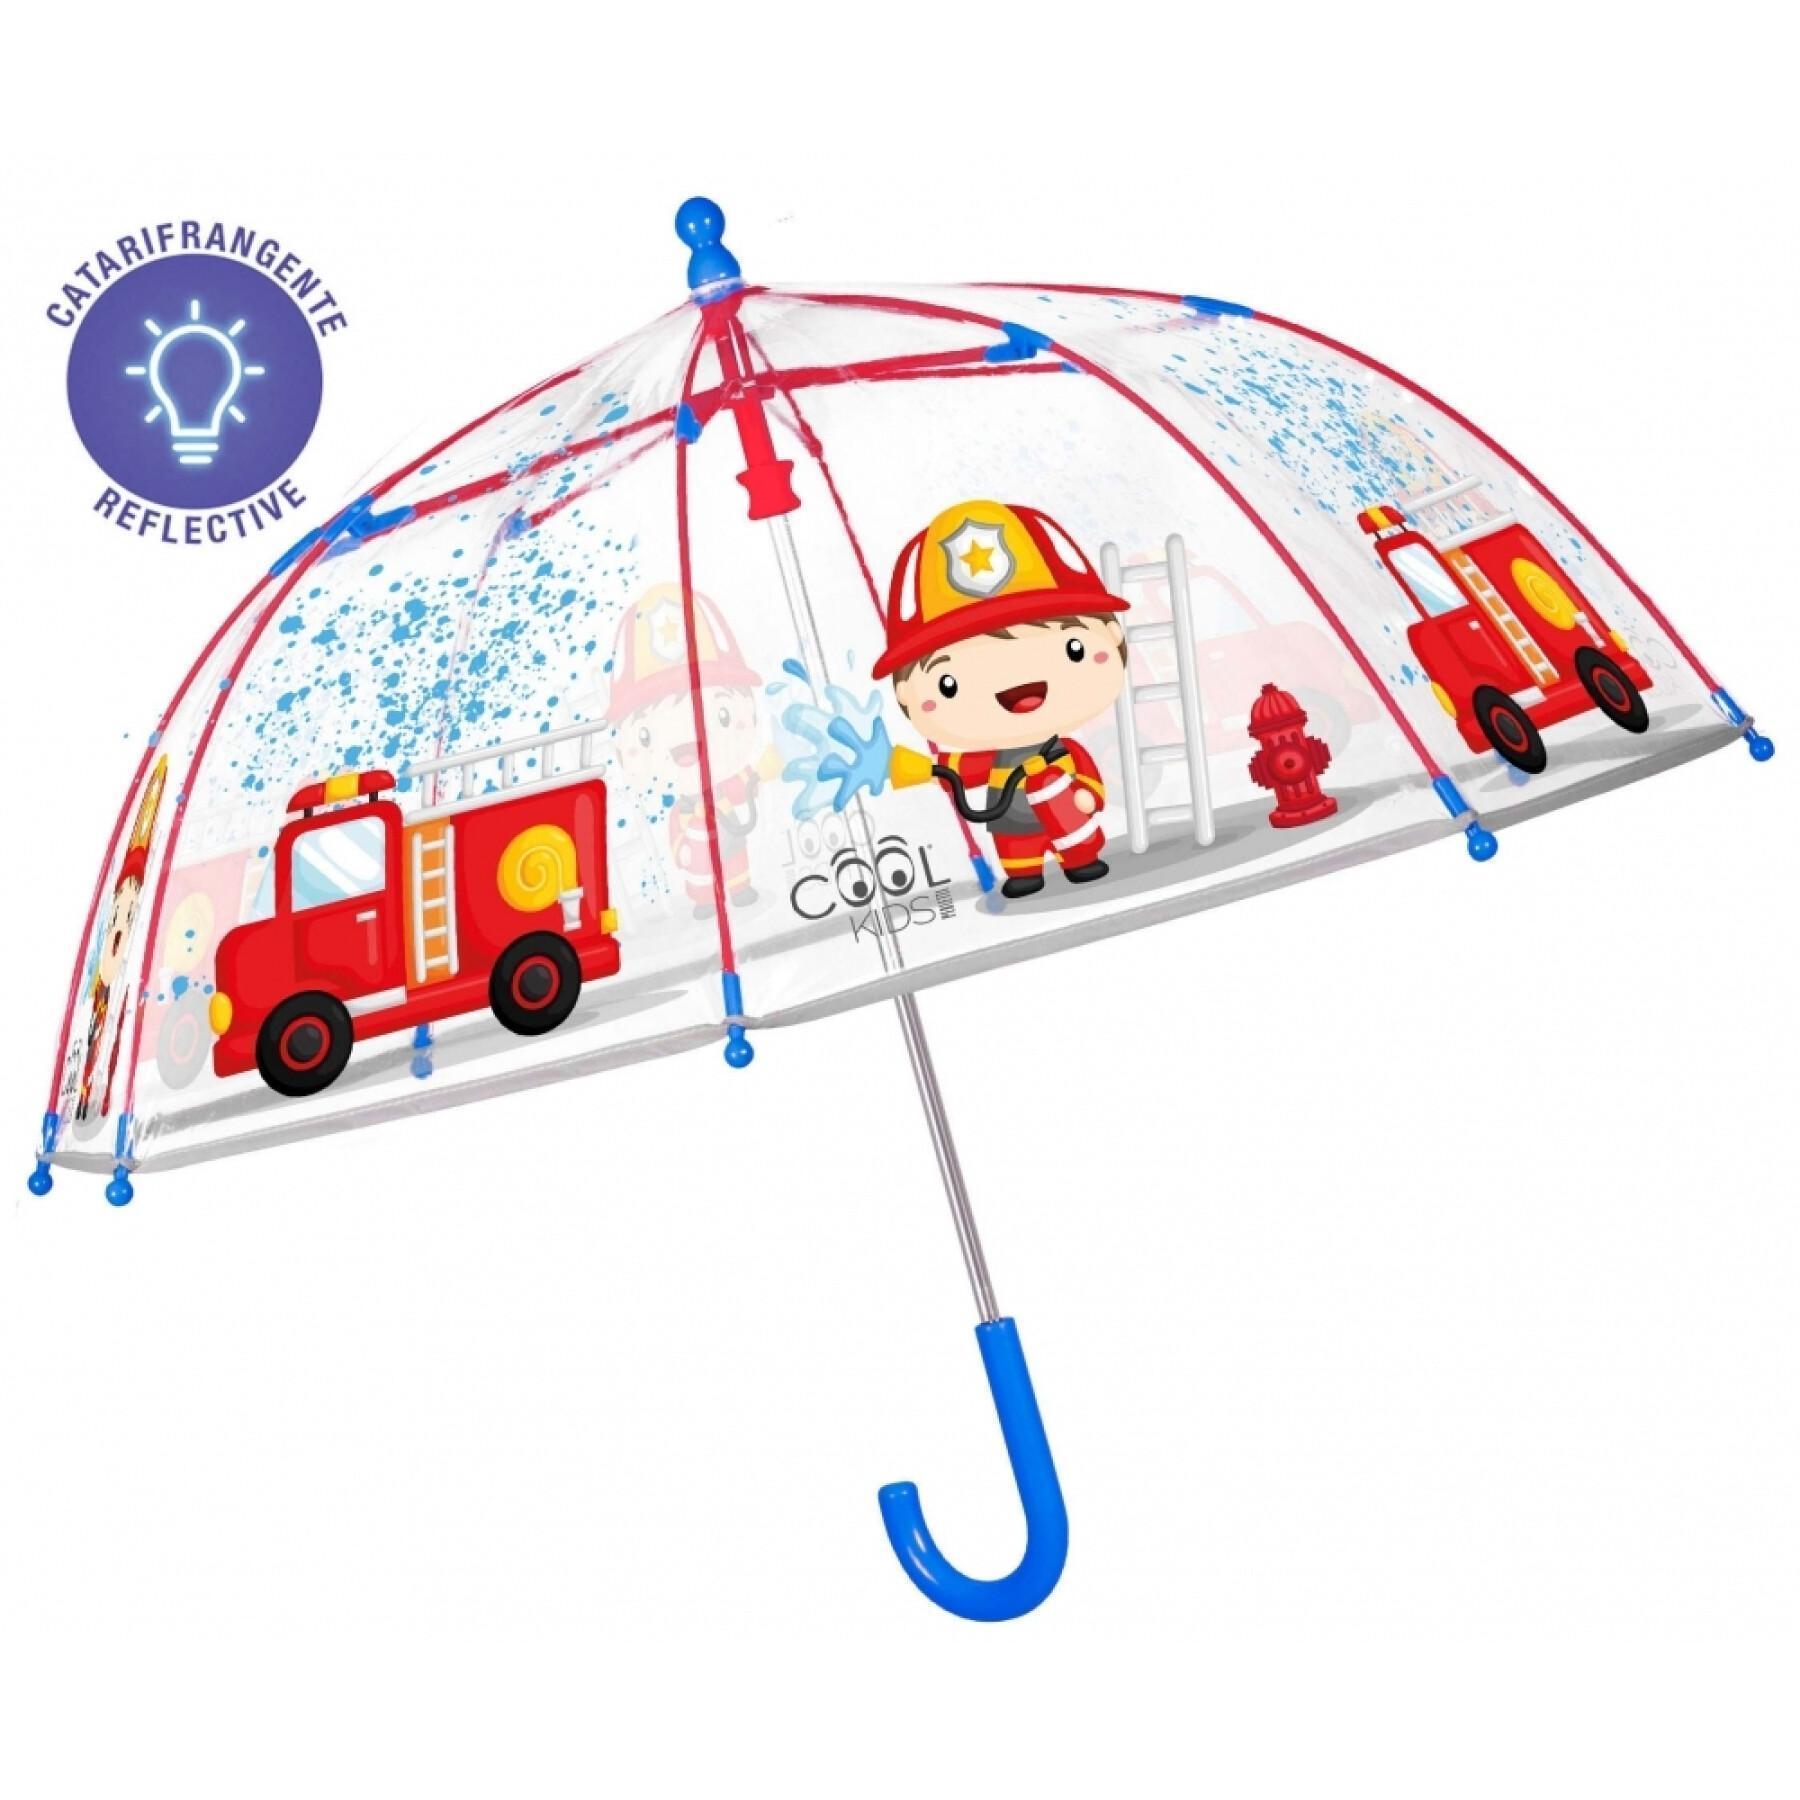 Paraguas infantil con campana de incendios Perletti